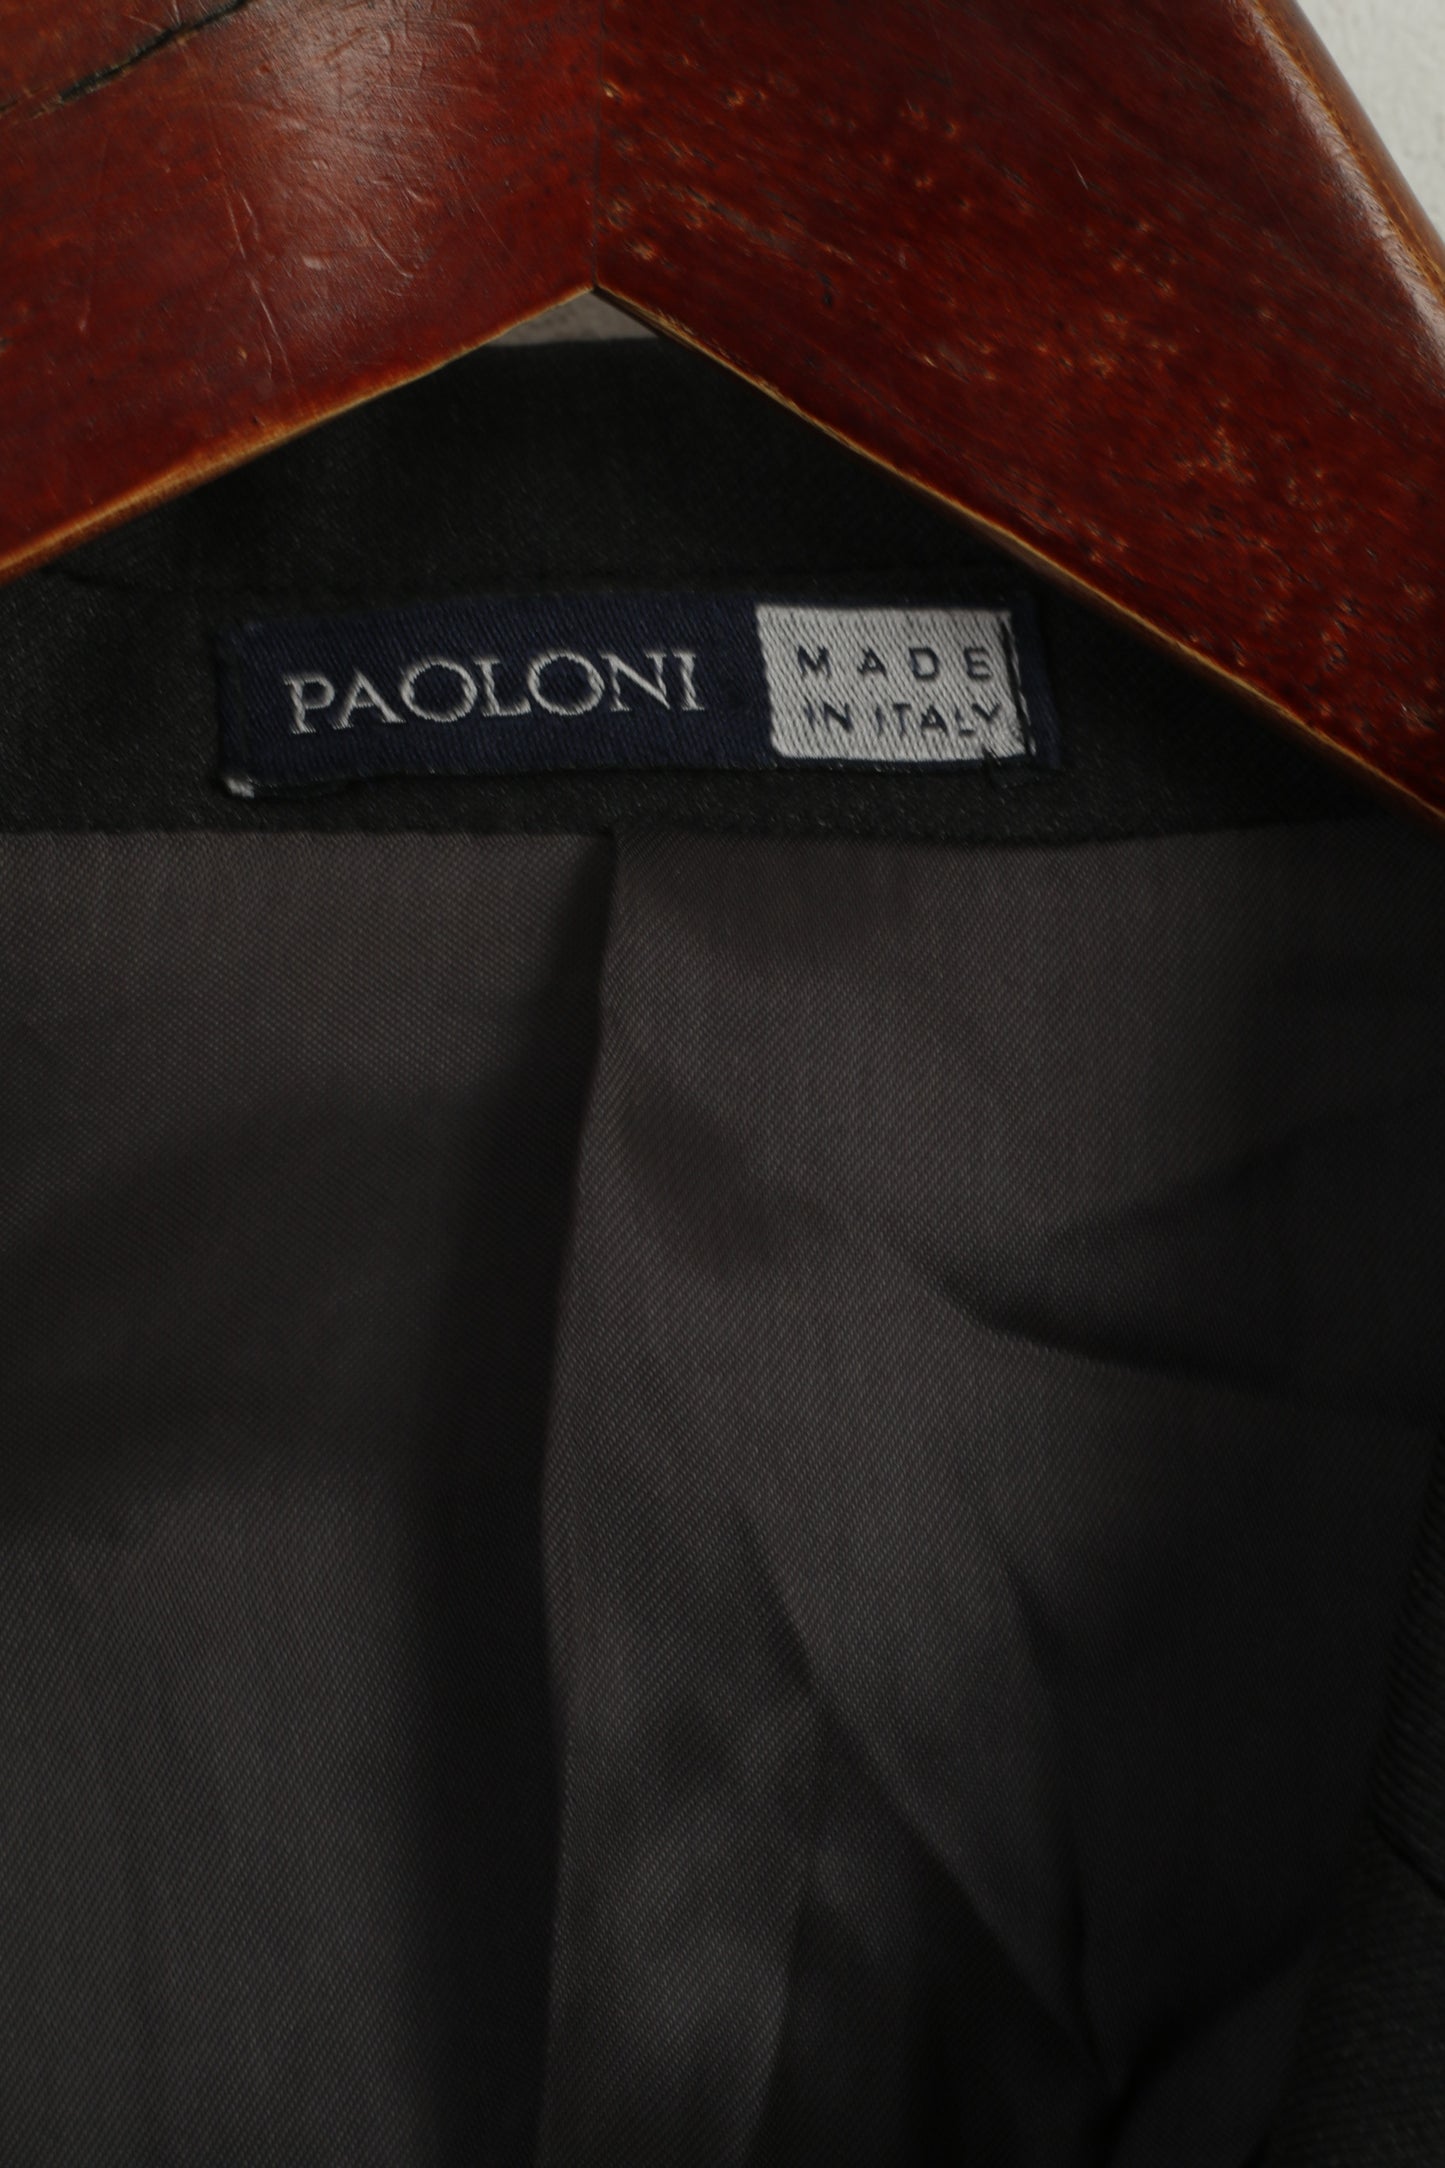 PAOLONI Uomo 48 38 Blazer Nero Lana Cerruti 110's Giacca Monopetto Made in Italy